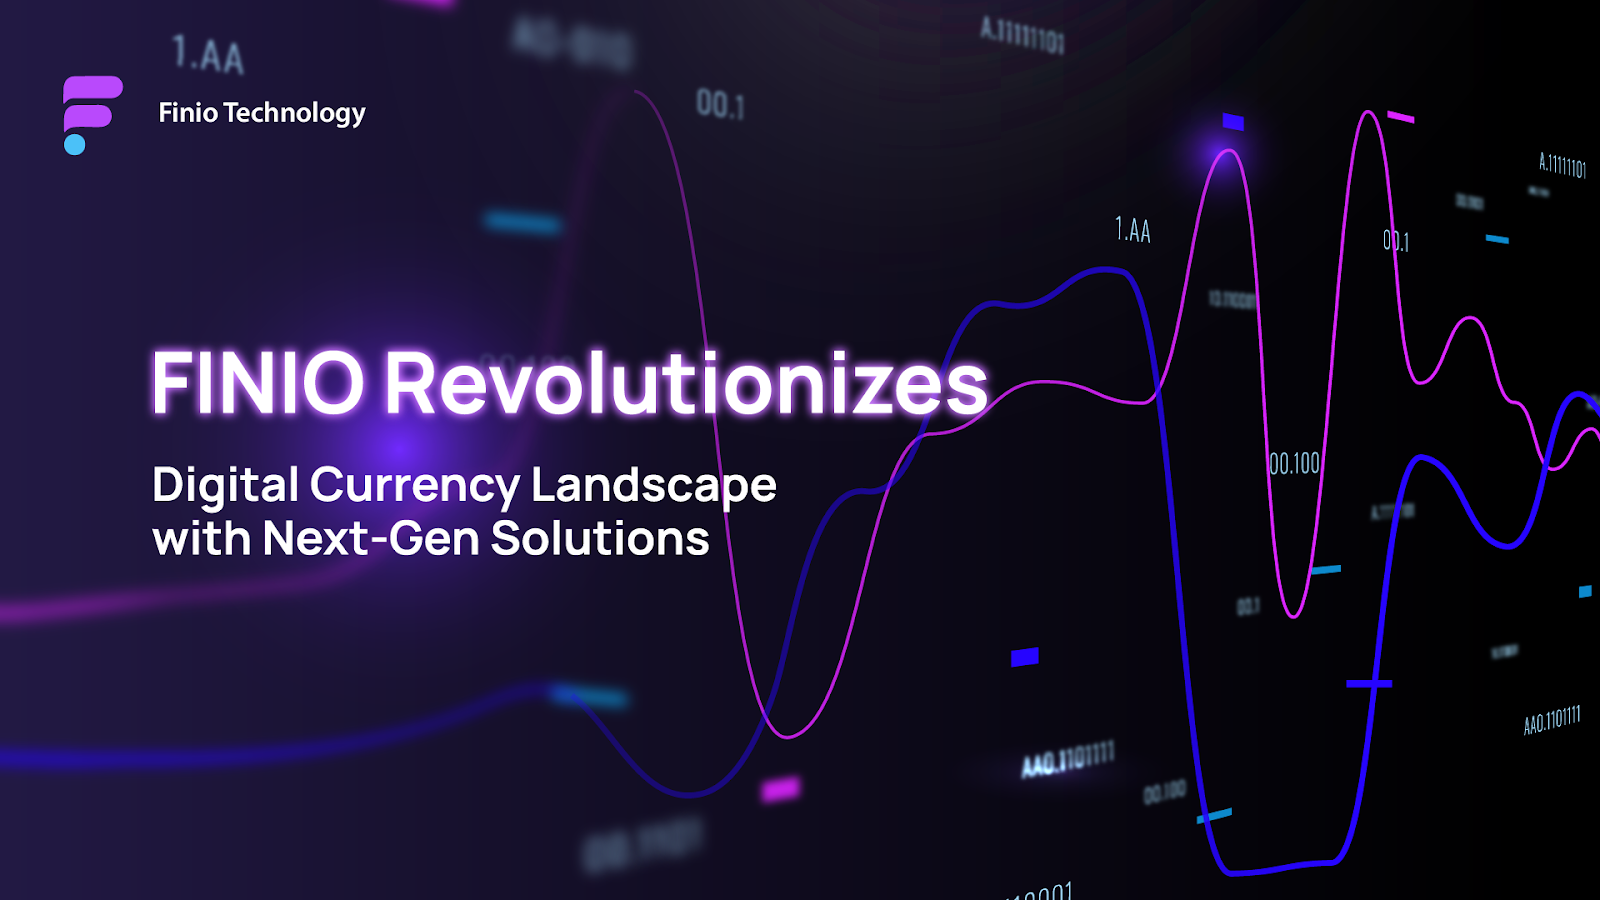 Finio Revolutionizes Digital Currency Landscape with Next-Gen Solutions